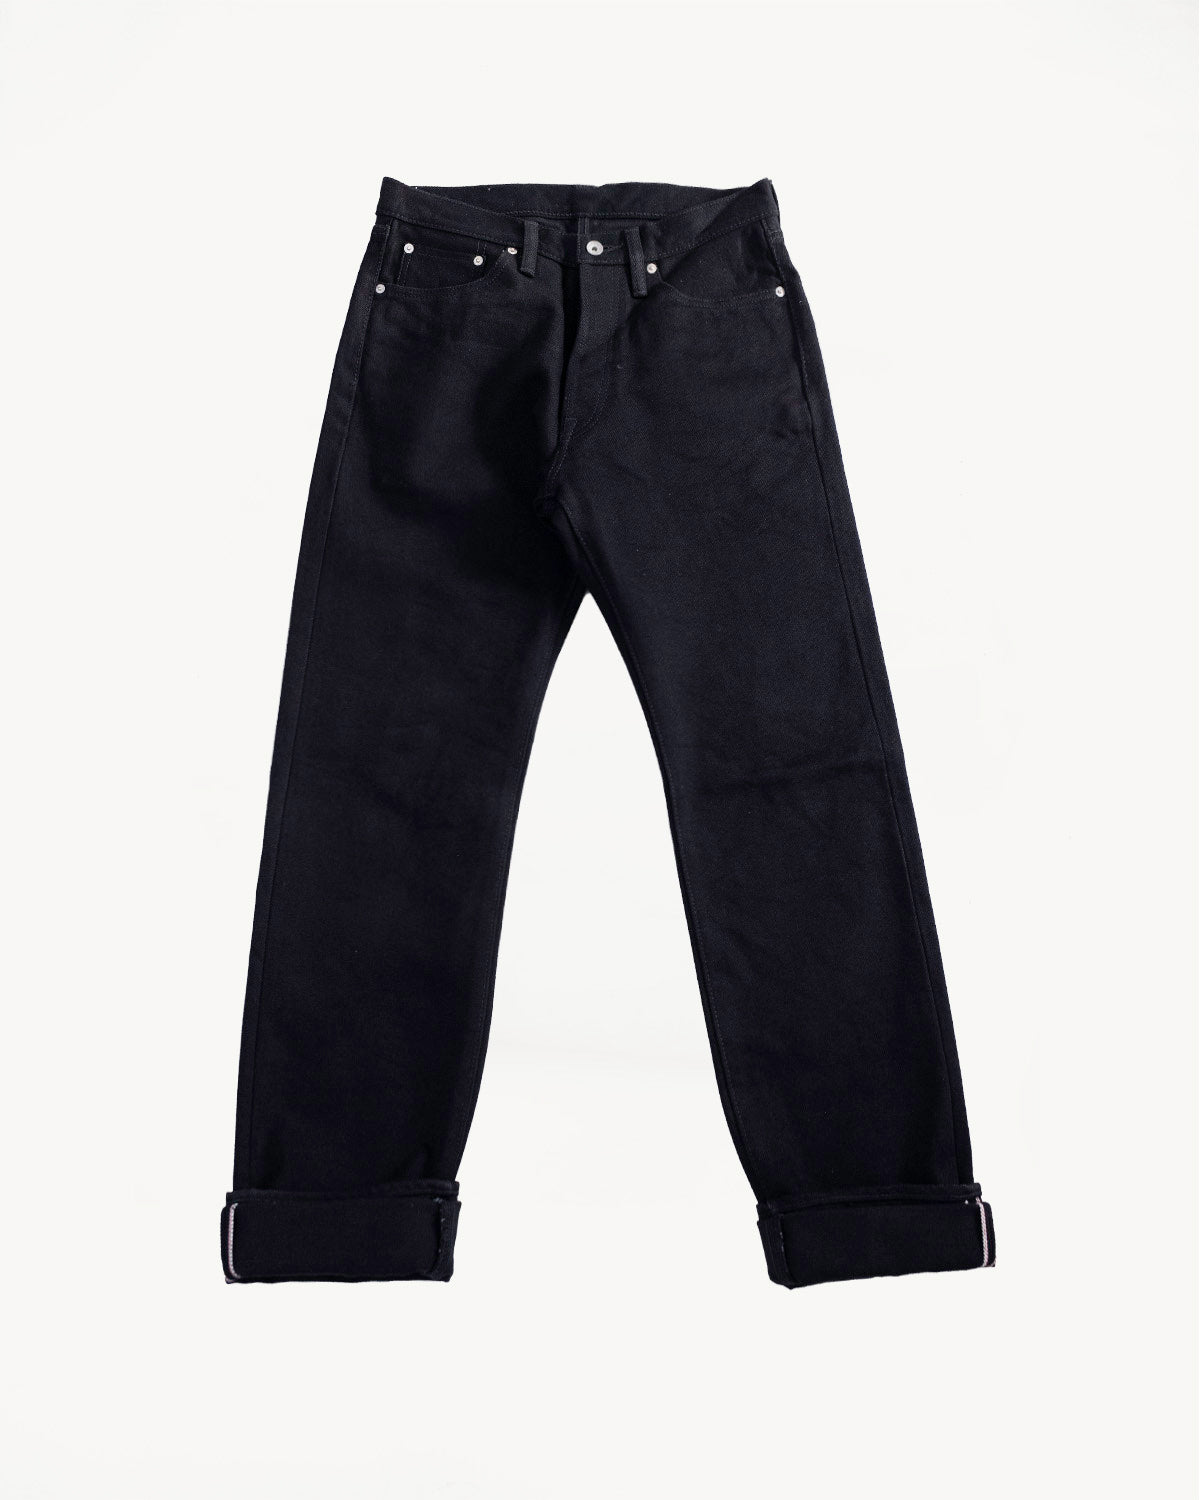 IH-888S-SBG - 21oz Selvedge Denim Medium/High Rise Tapered Cut Jeans - Superblack (Fades to Grey)